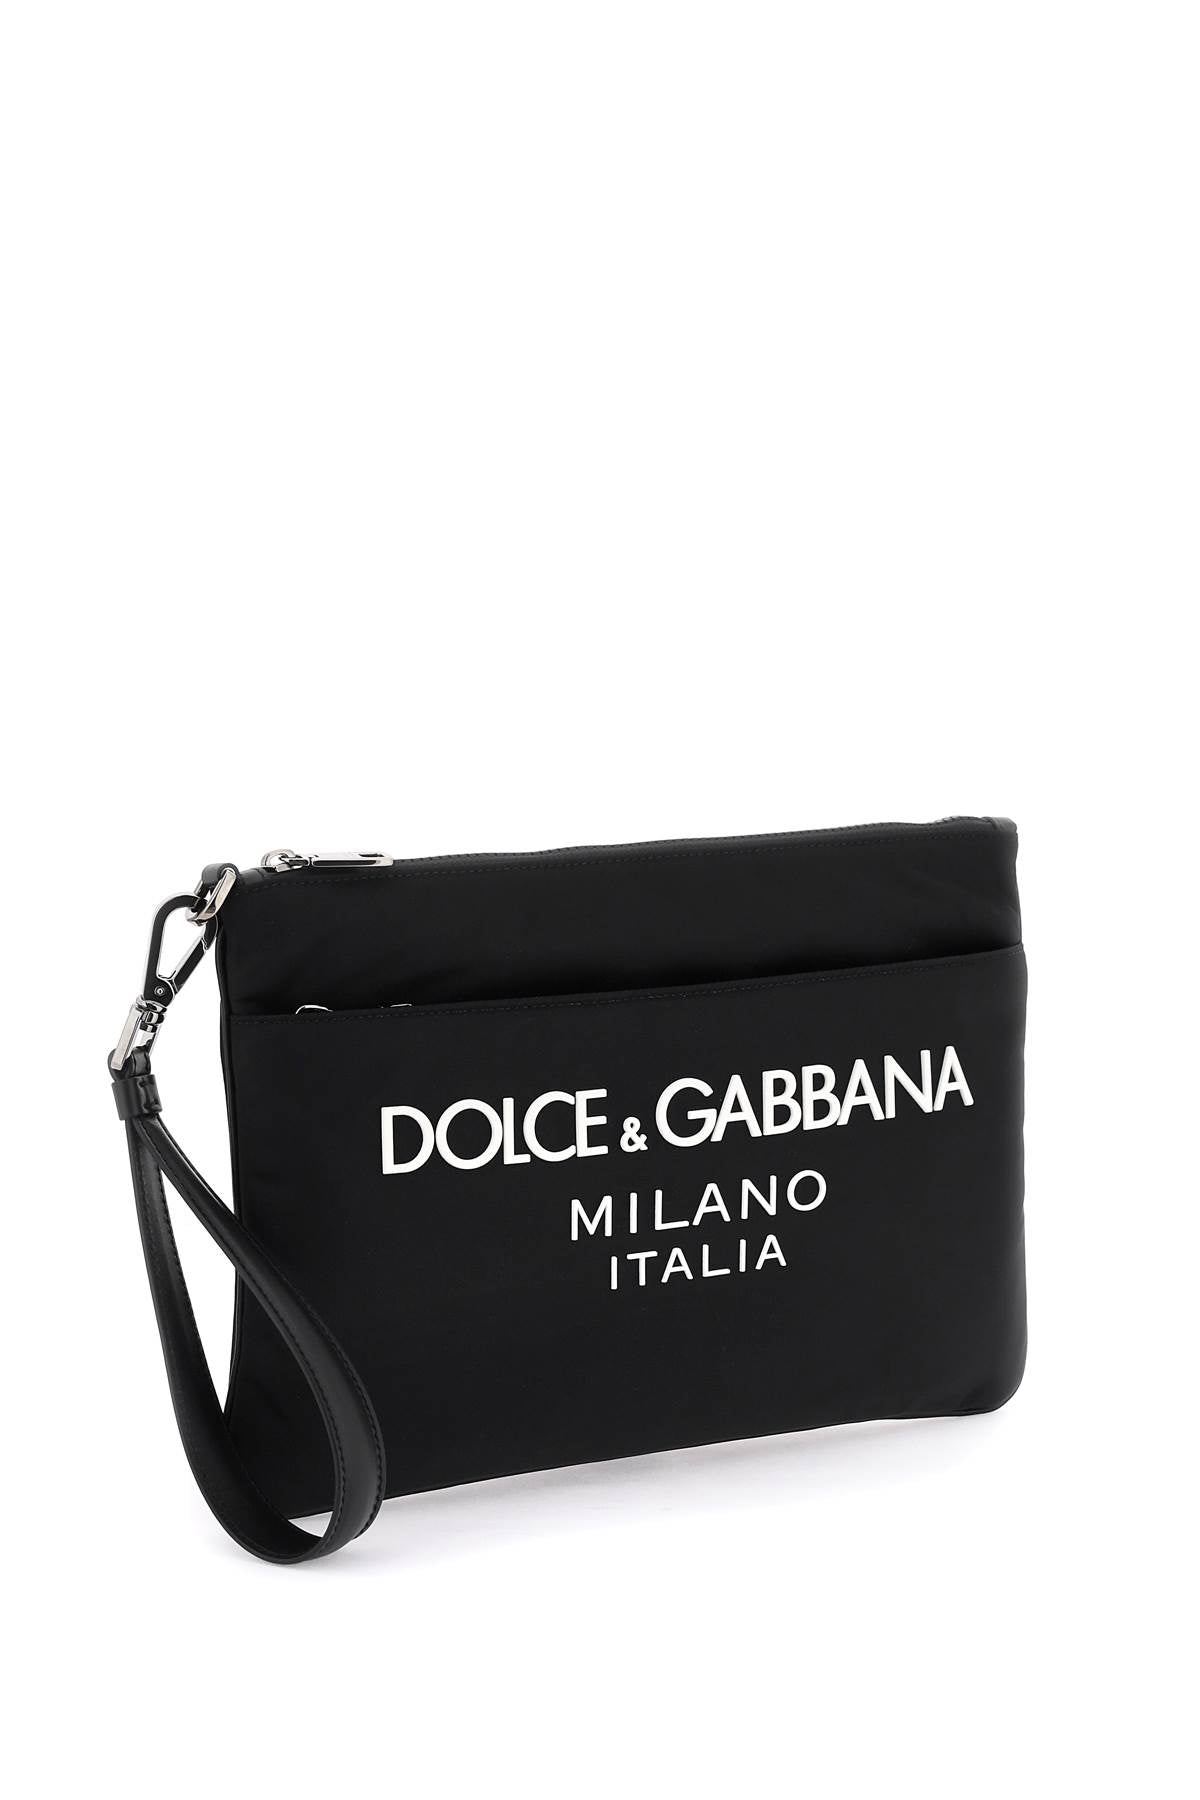 Dolce & Gabbana Dolce & gabbana nylon pouch with rubberized logo